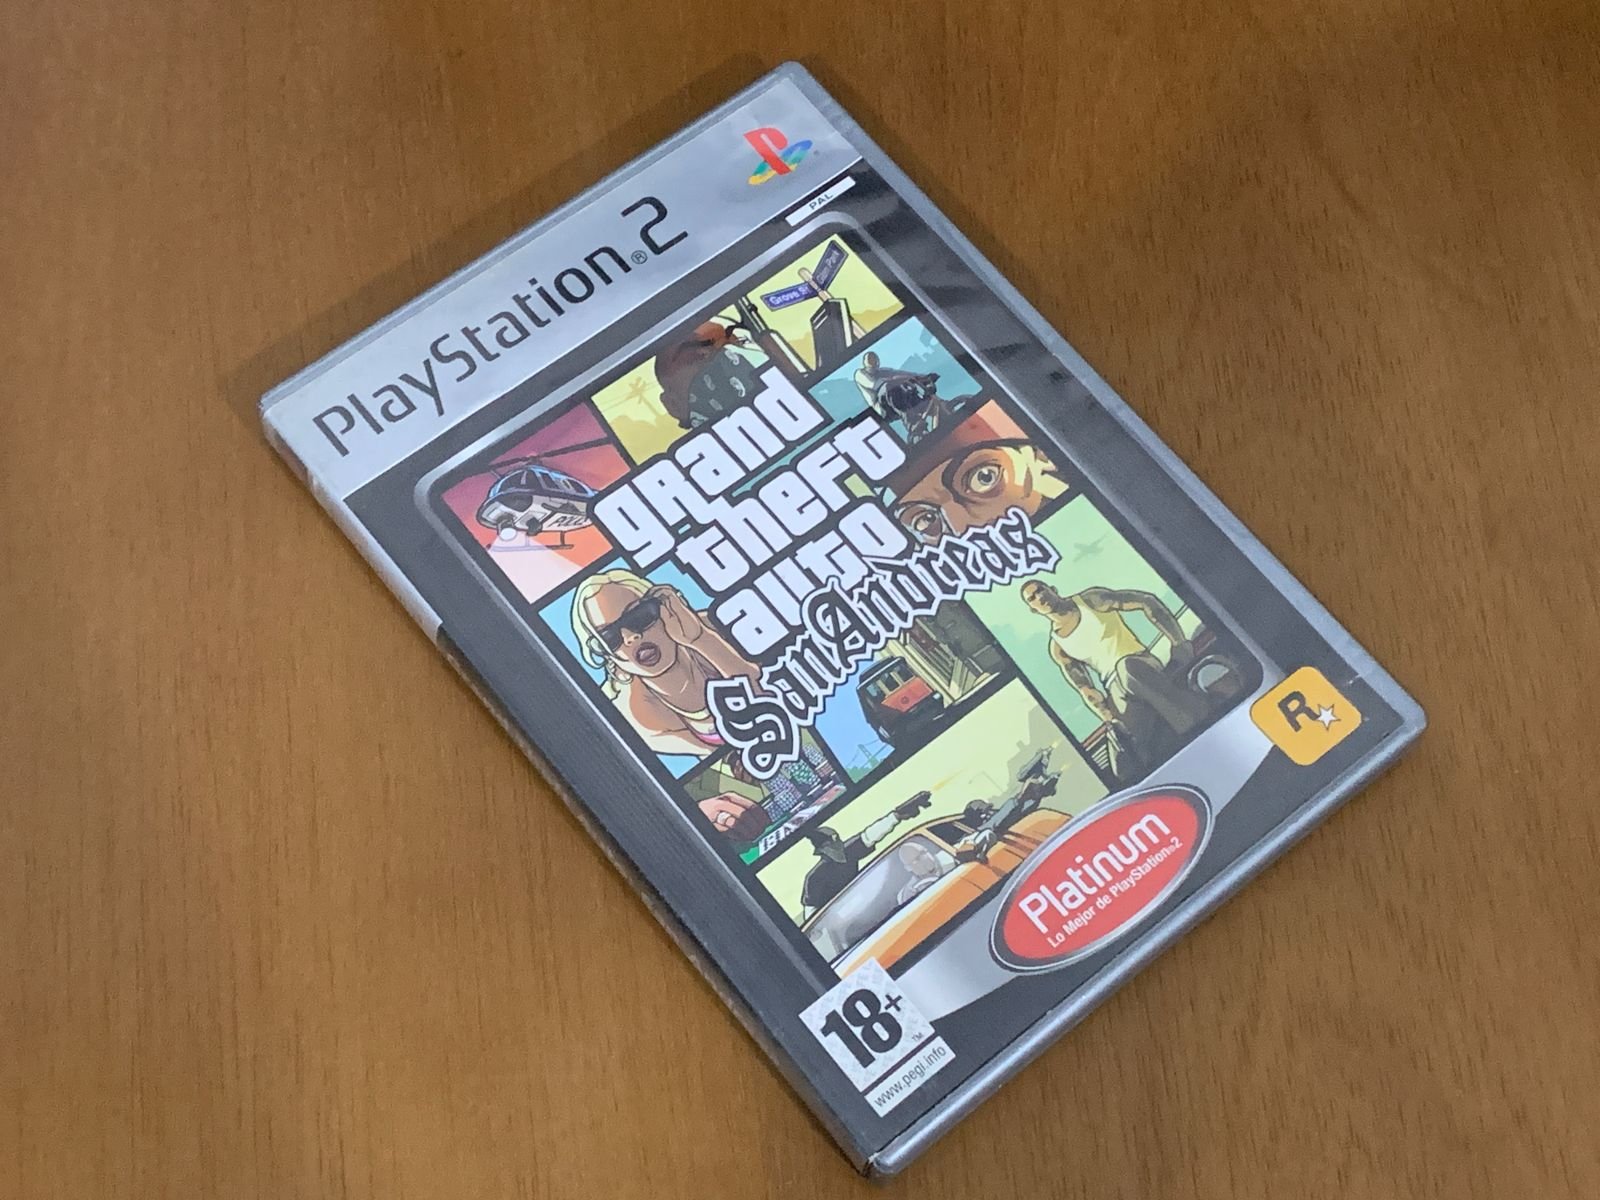 Grand Theft Auto San Andreas PS2 (Jogo Original Gta) (Seminovo